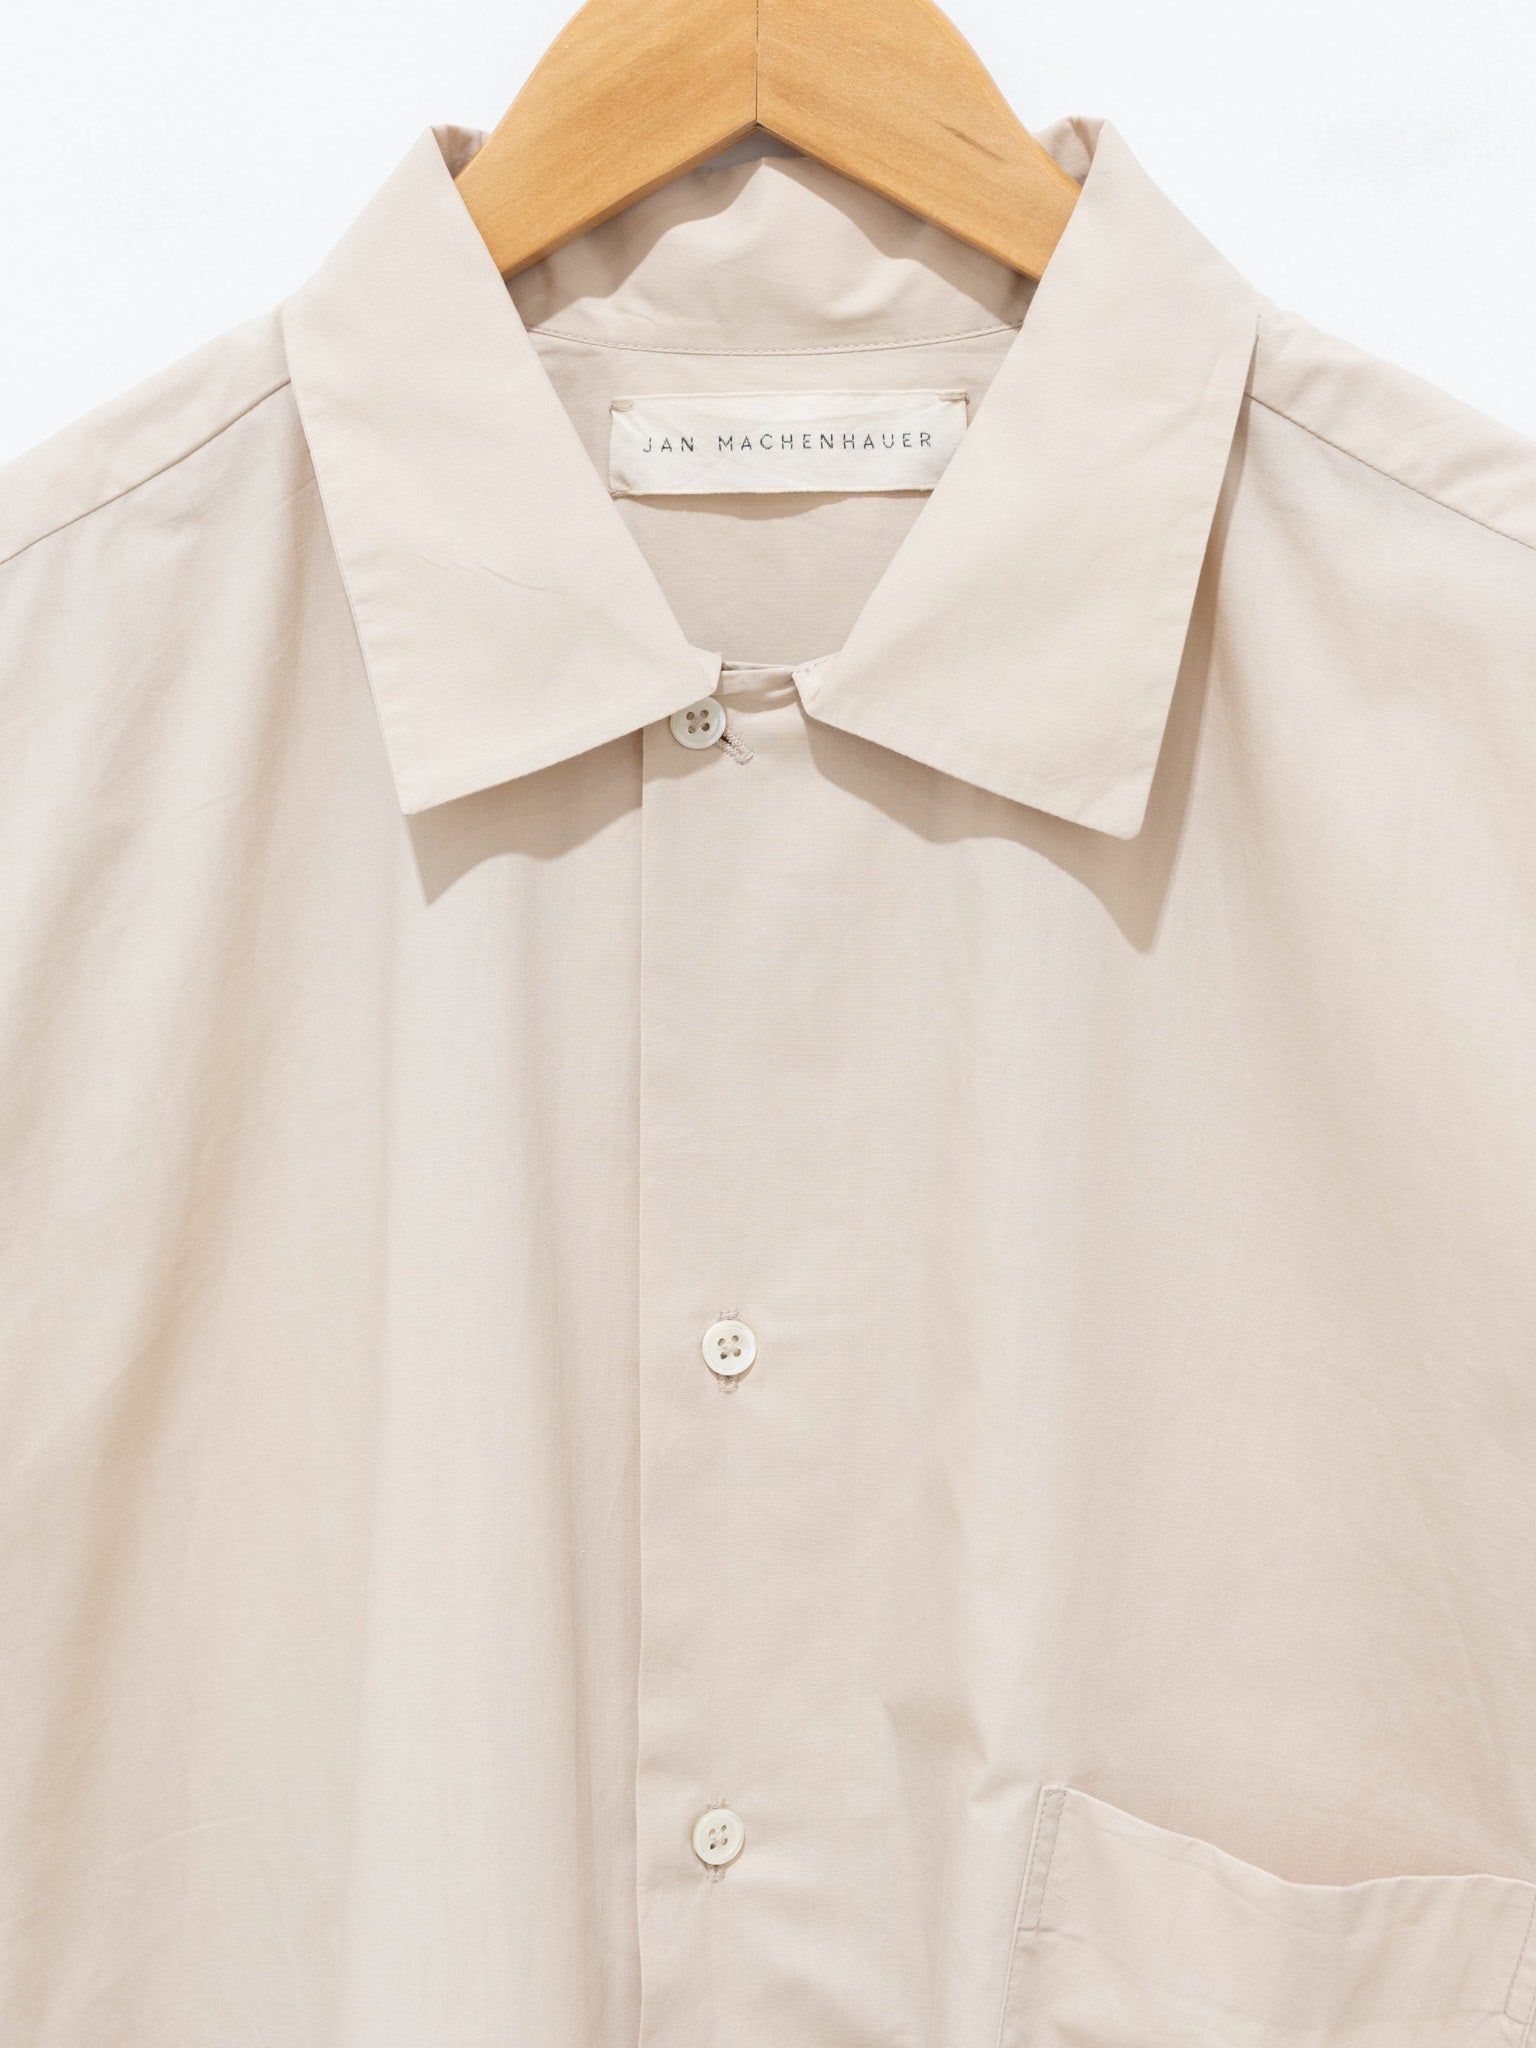 Namu Shop - Jan Machenhauer Fred Shirt - Almond Cotton Poplin